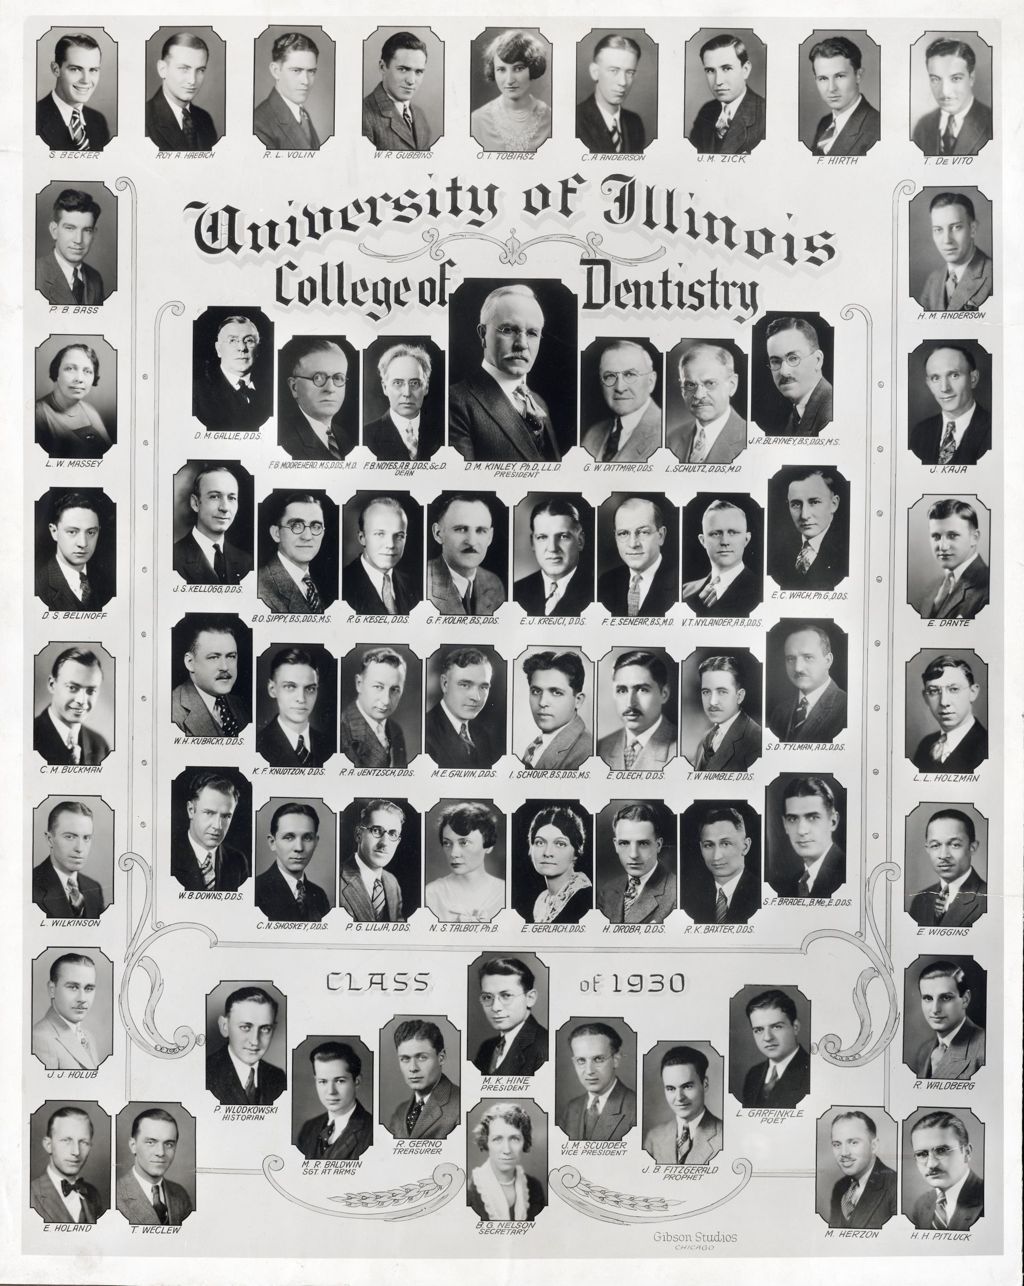 Miniature of 1930 graduating class, University of Illinois College of Dentistry